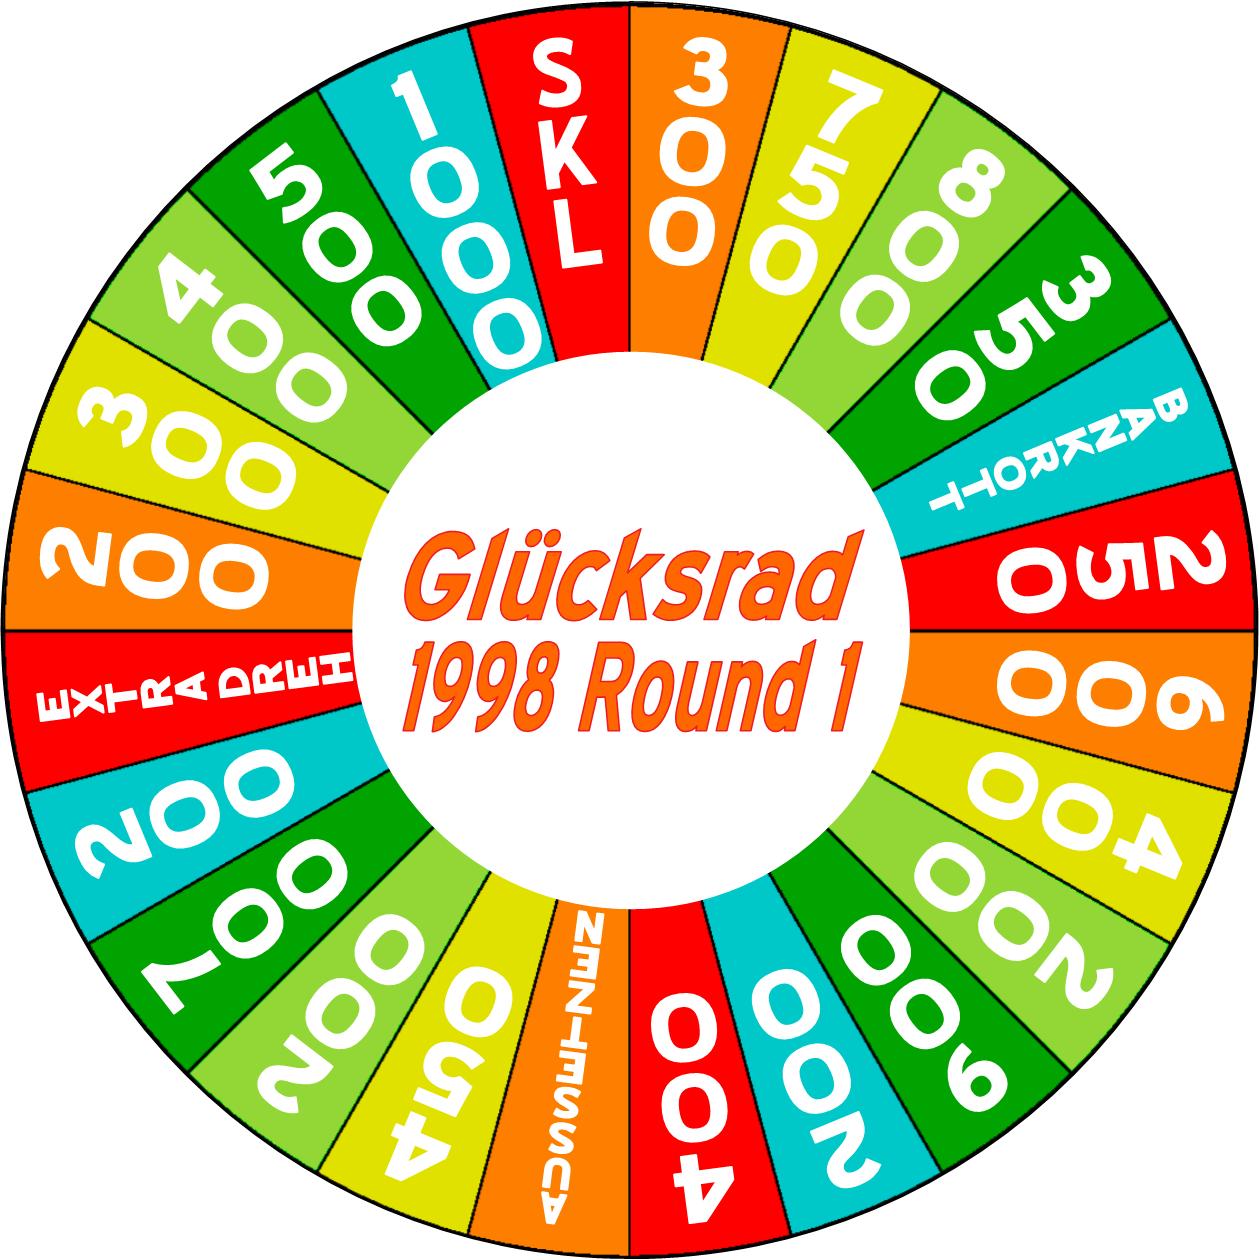 Glücksrad 1998 Round 1 by germanname